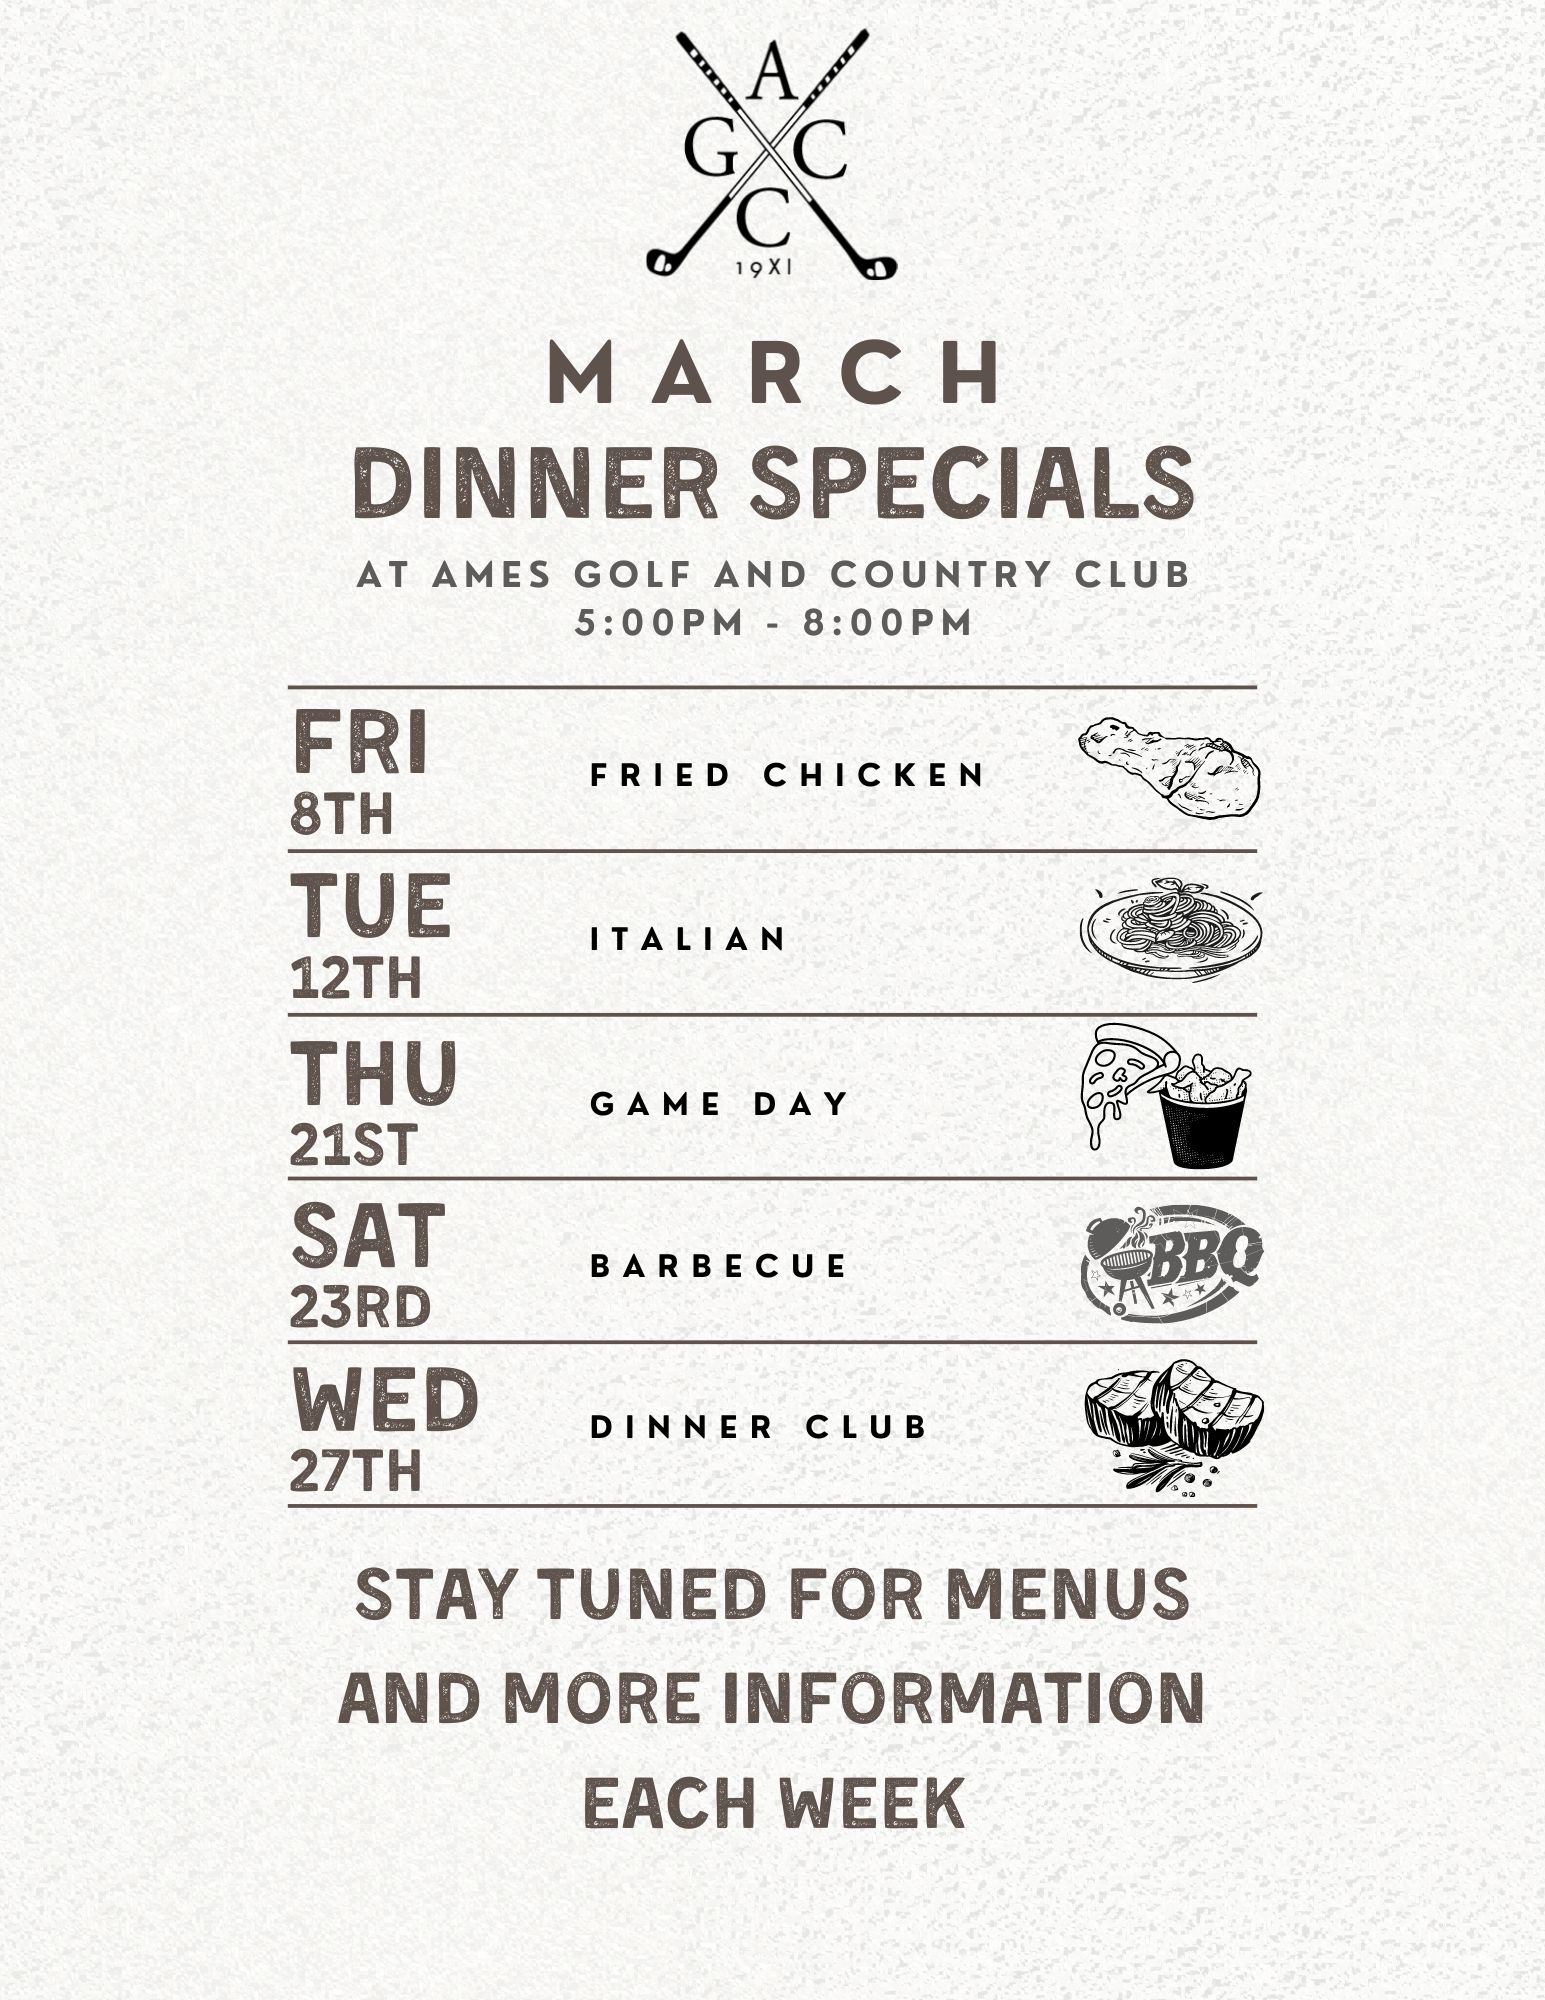 March 24 dinner specials